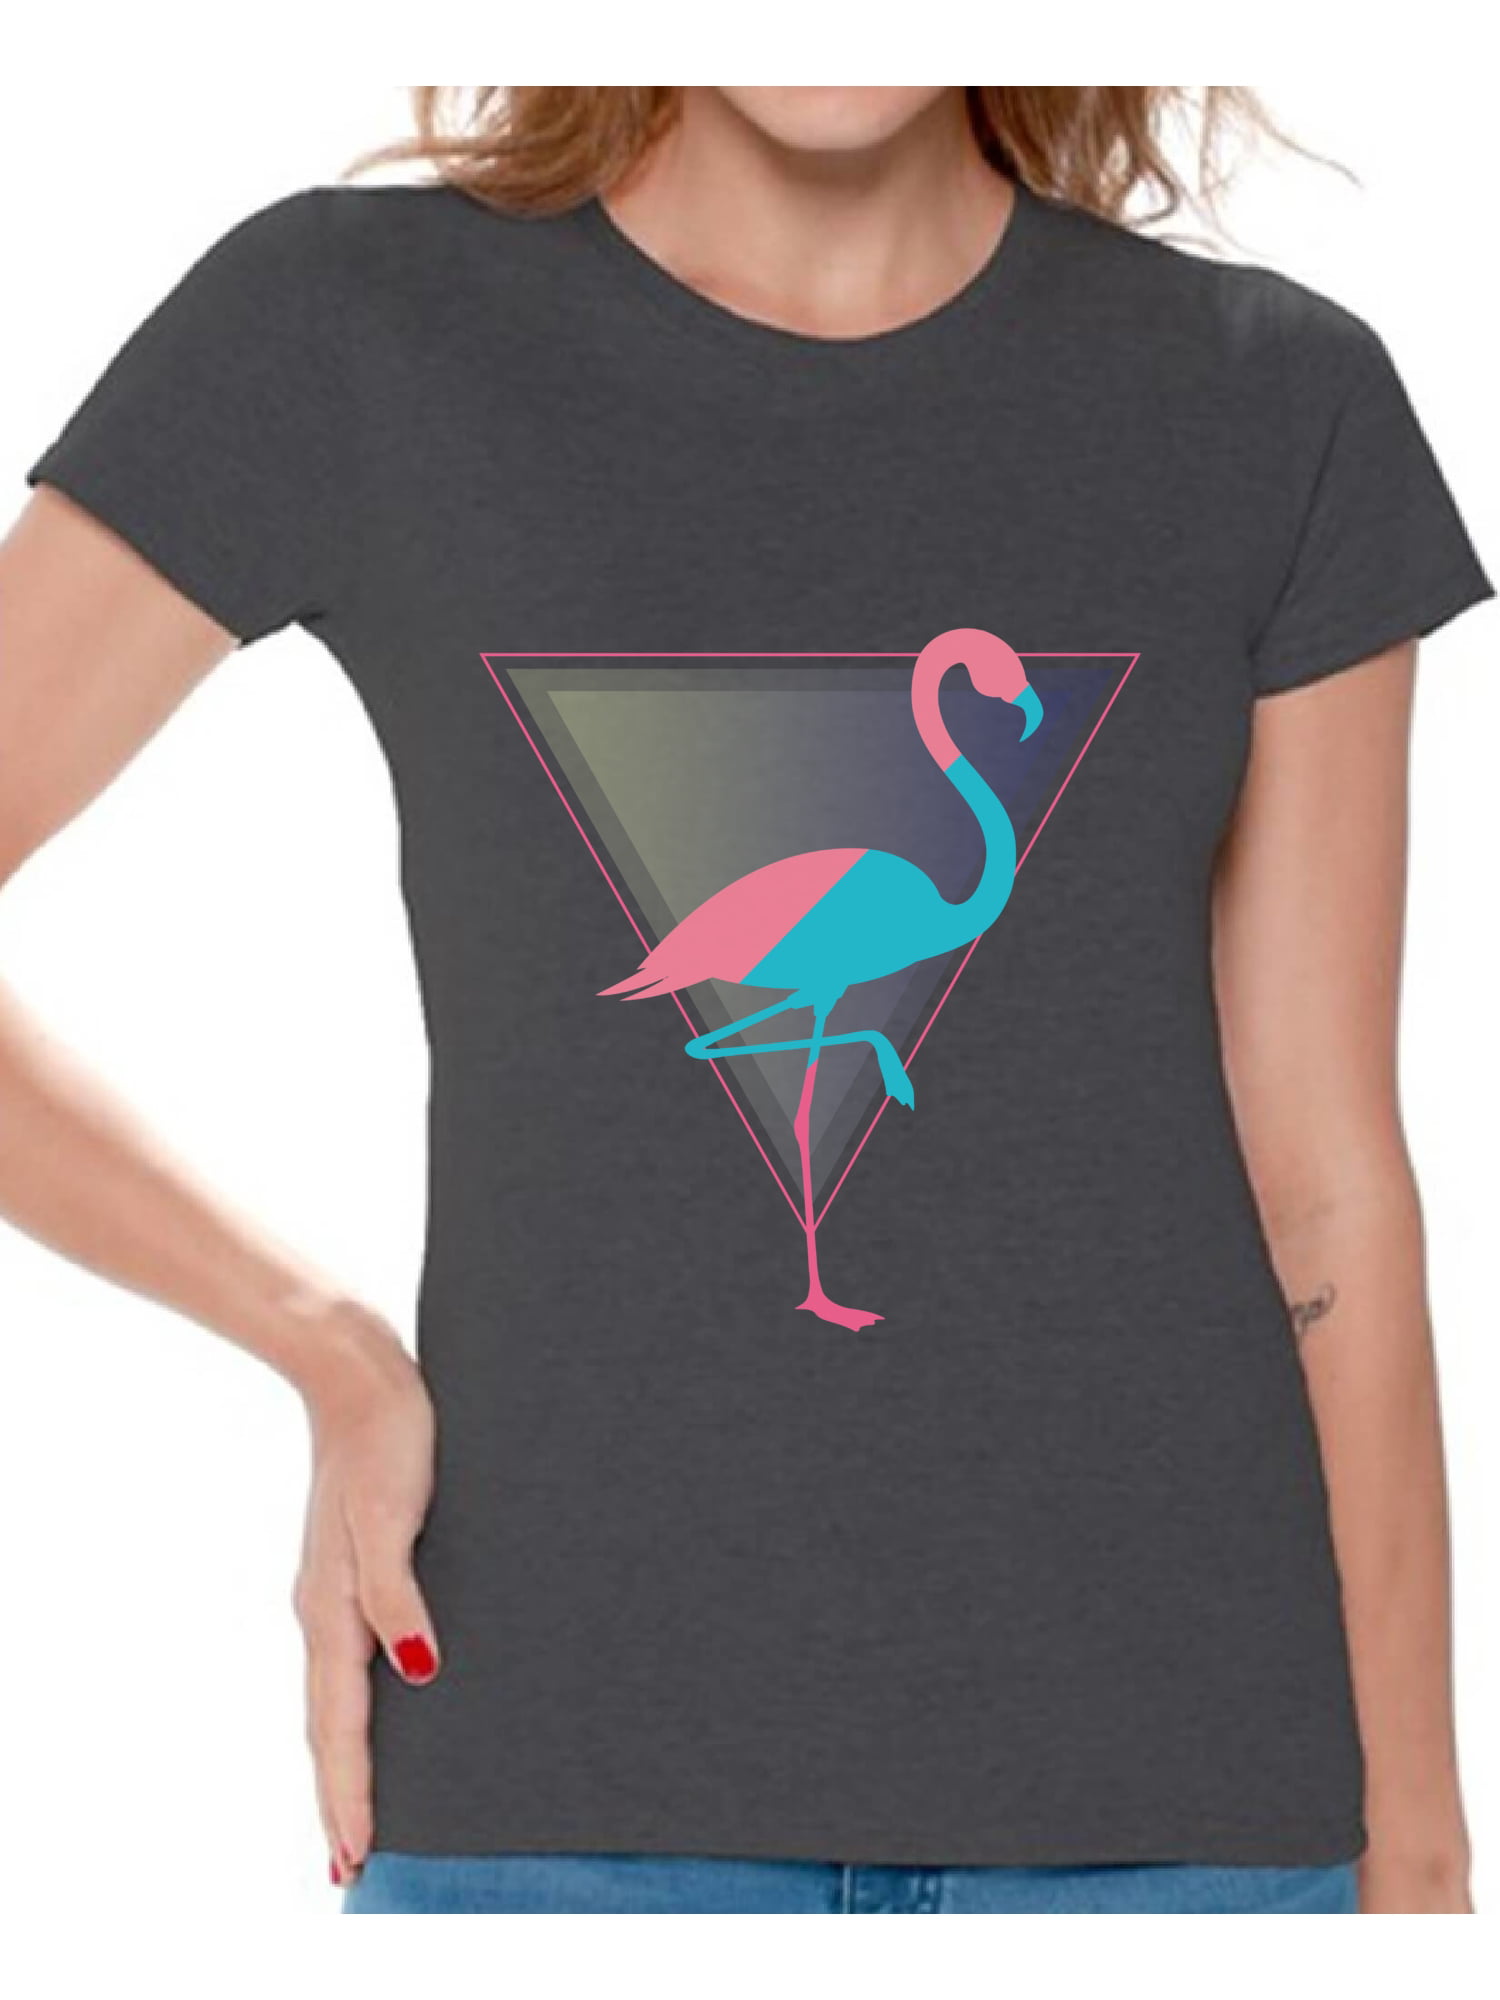 floral flamingo flamingo t-shirt summer t-shirt flamingo gifts Flamingo shirt fabulous shirt gift for her women's flamingo shirt